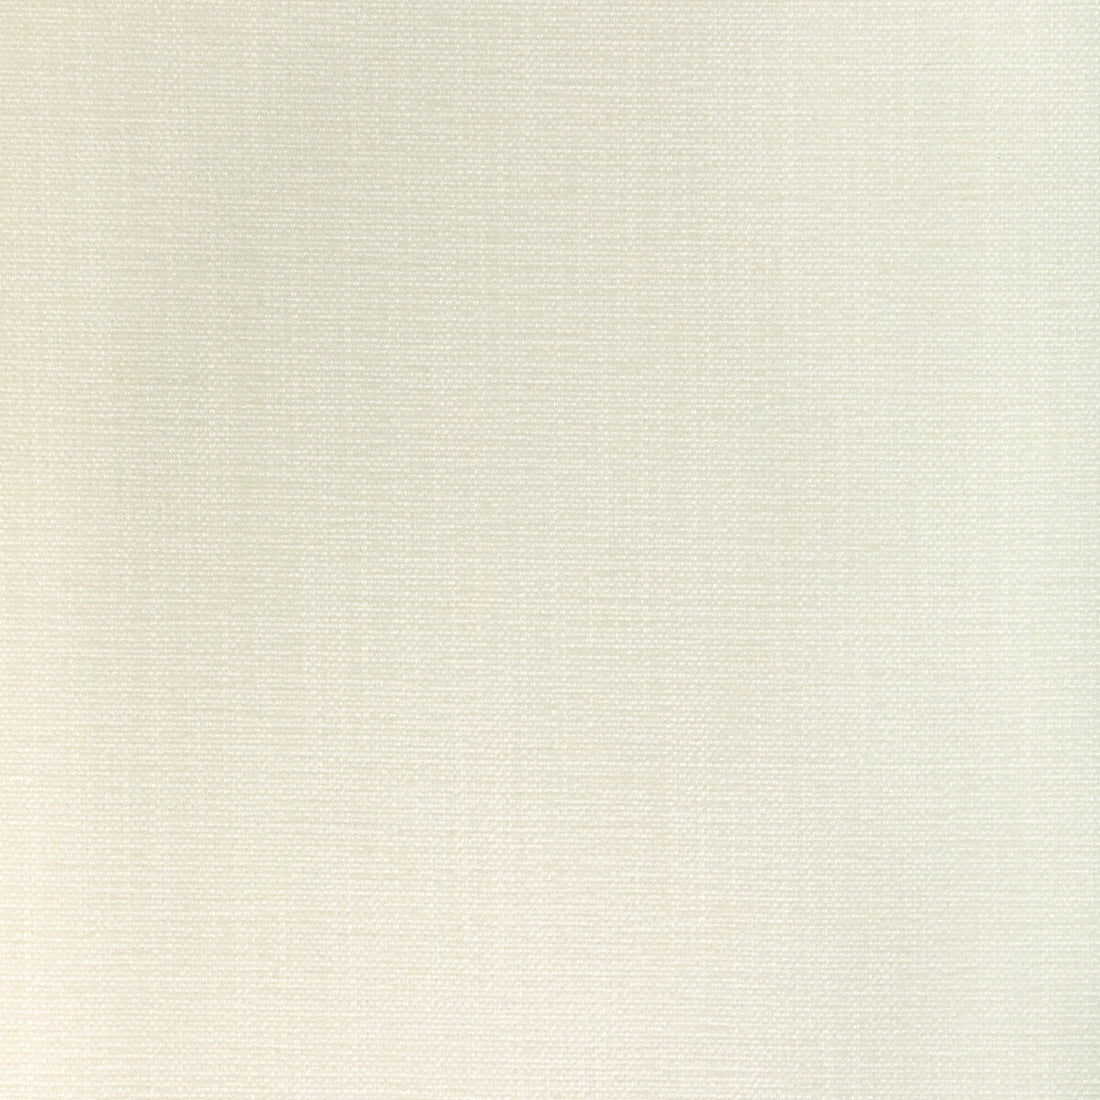 Kravet Smart fabric in 36650-1 color - pattern 36650.1.0 - by Kravet Smart in the Performance Kravetarmor collection